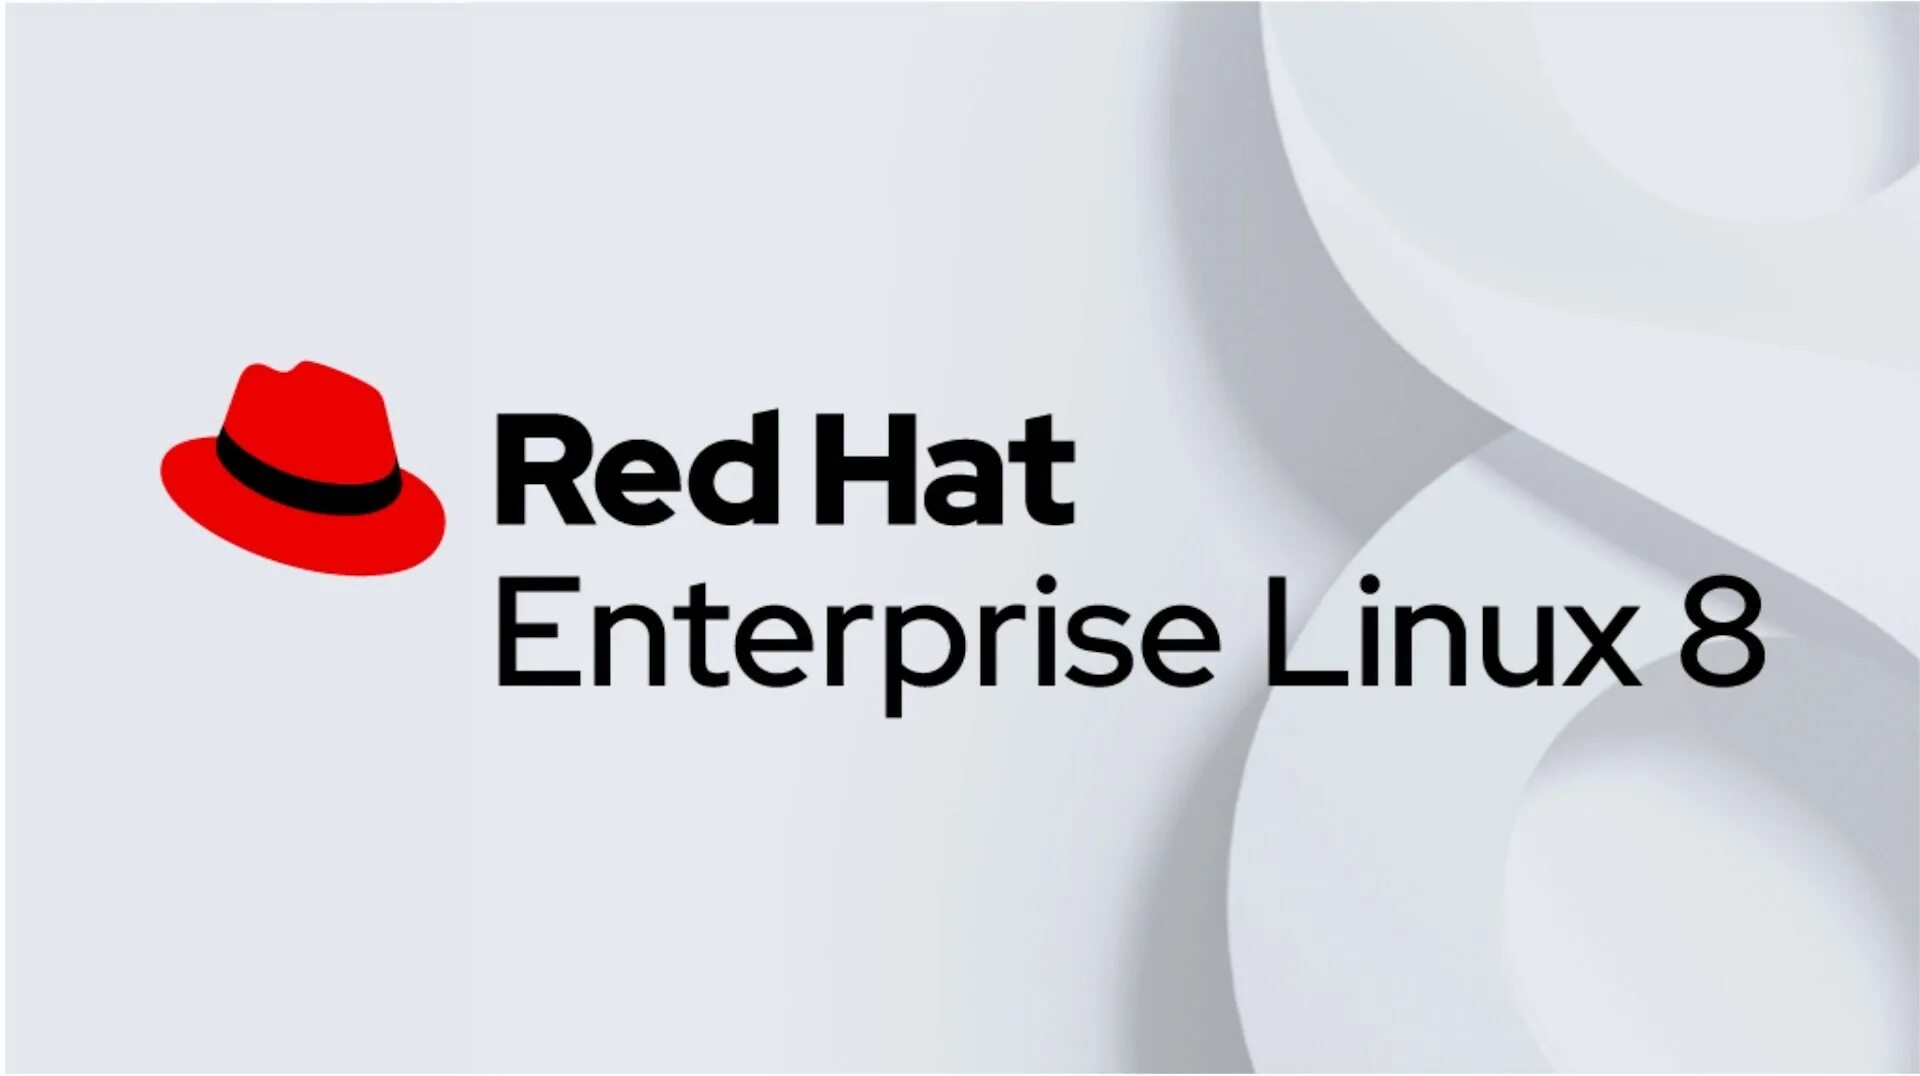 Red hat 8. Red hat Enterprise Linux. Red hat Enterprise Linux (RHEL). RHEL 8. Red hat Enterprise Linux 8.